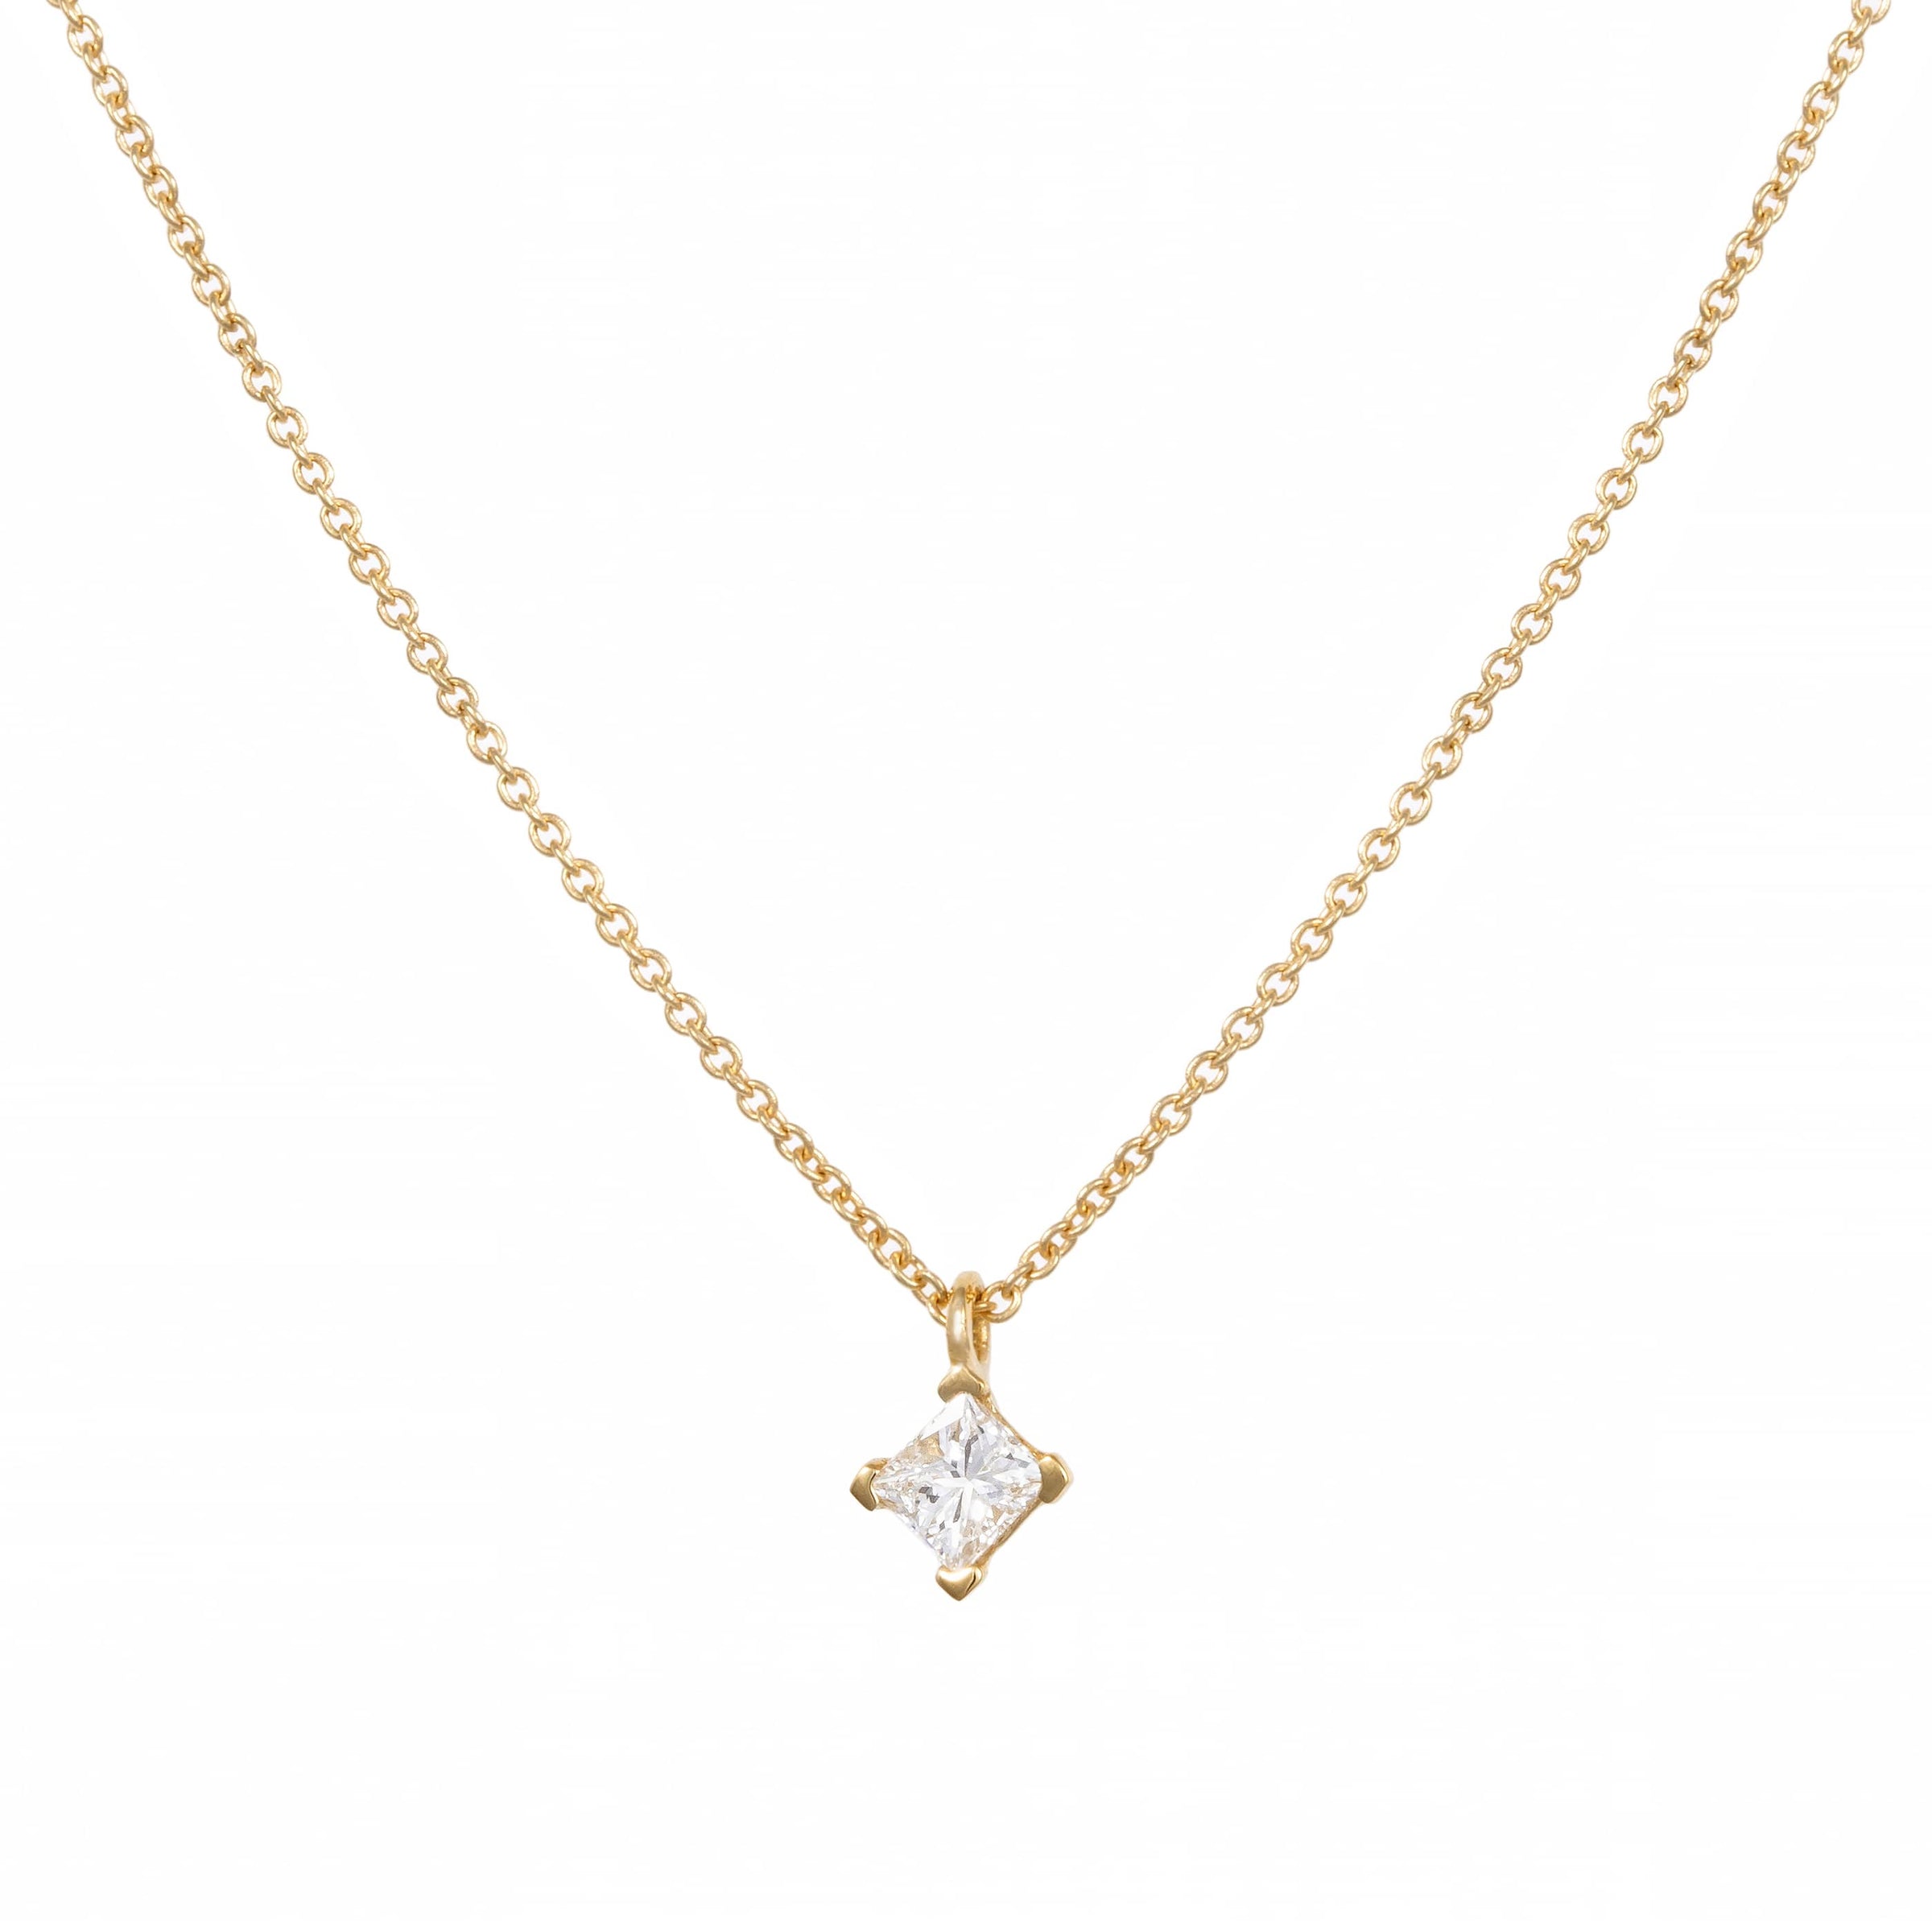 Princess Diamond Halo Necklace18k White Gold 0.70ctw at D